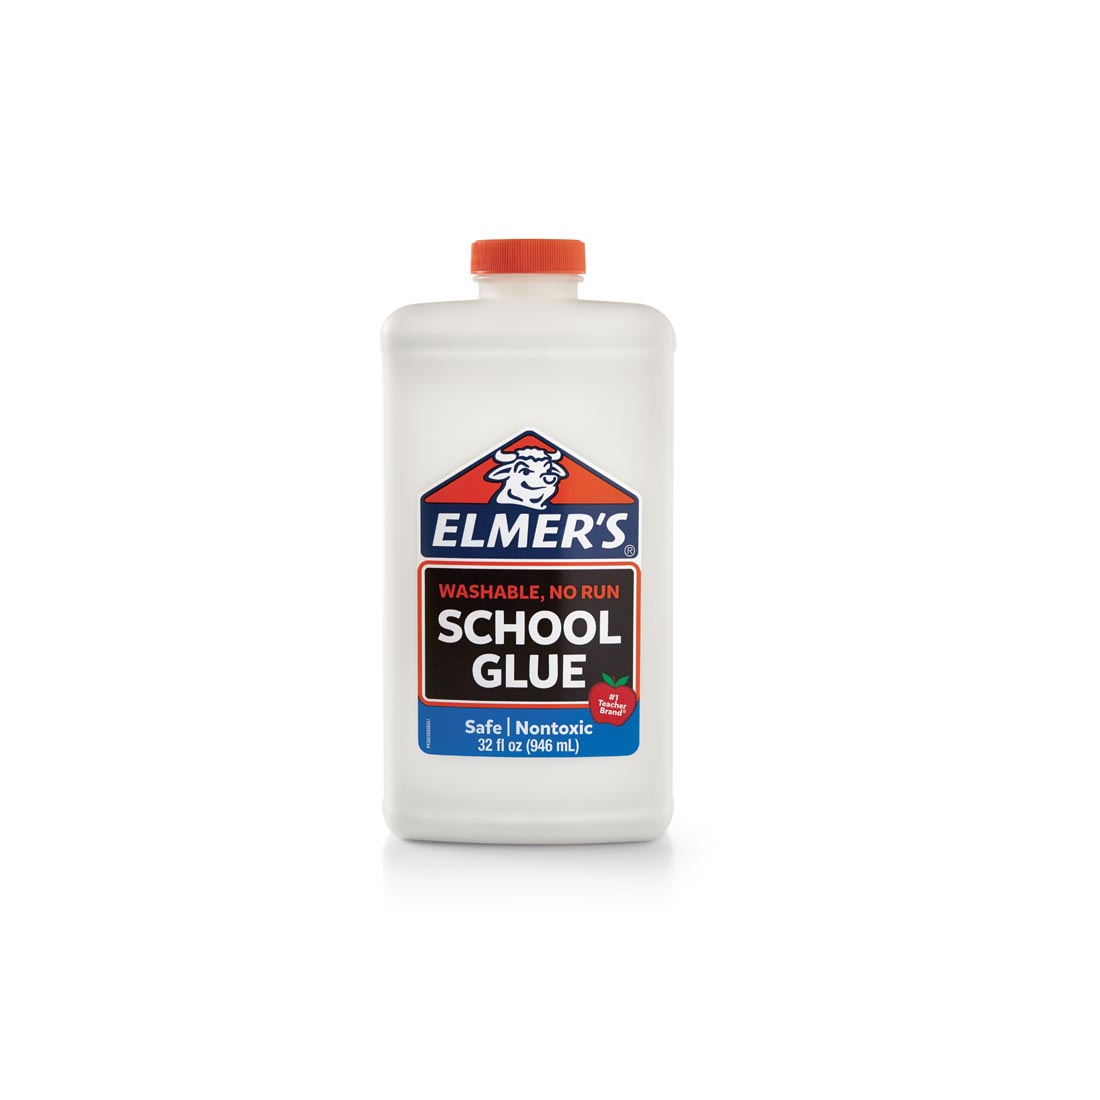 Elmer's Washable School Glue bottle